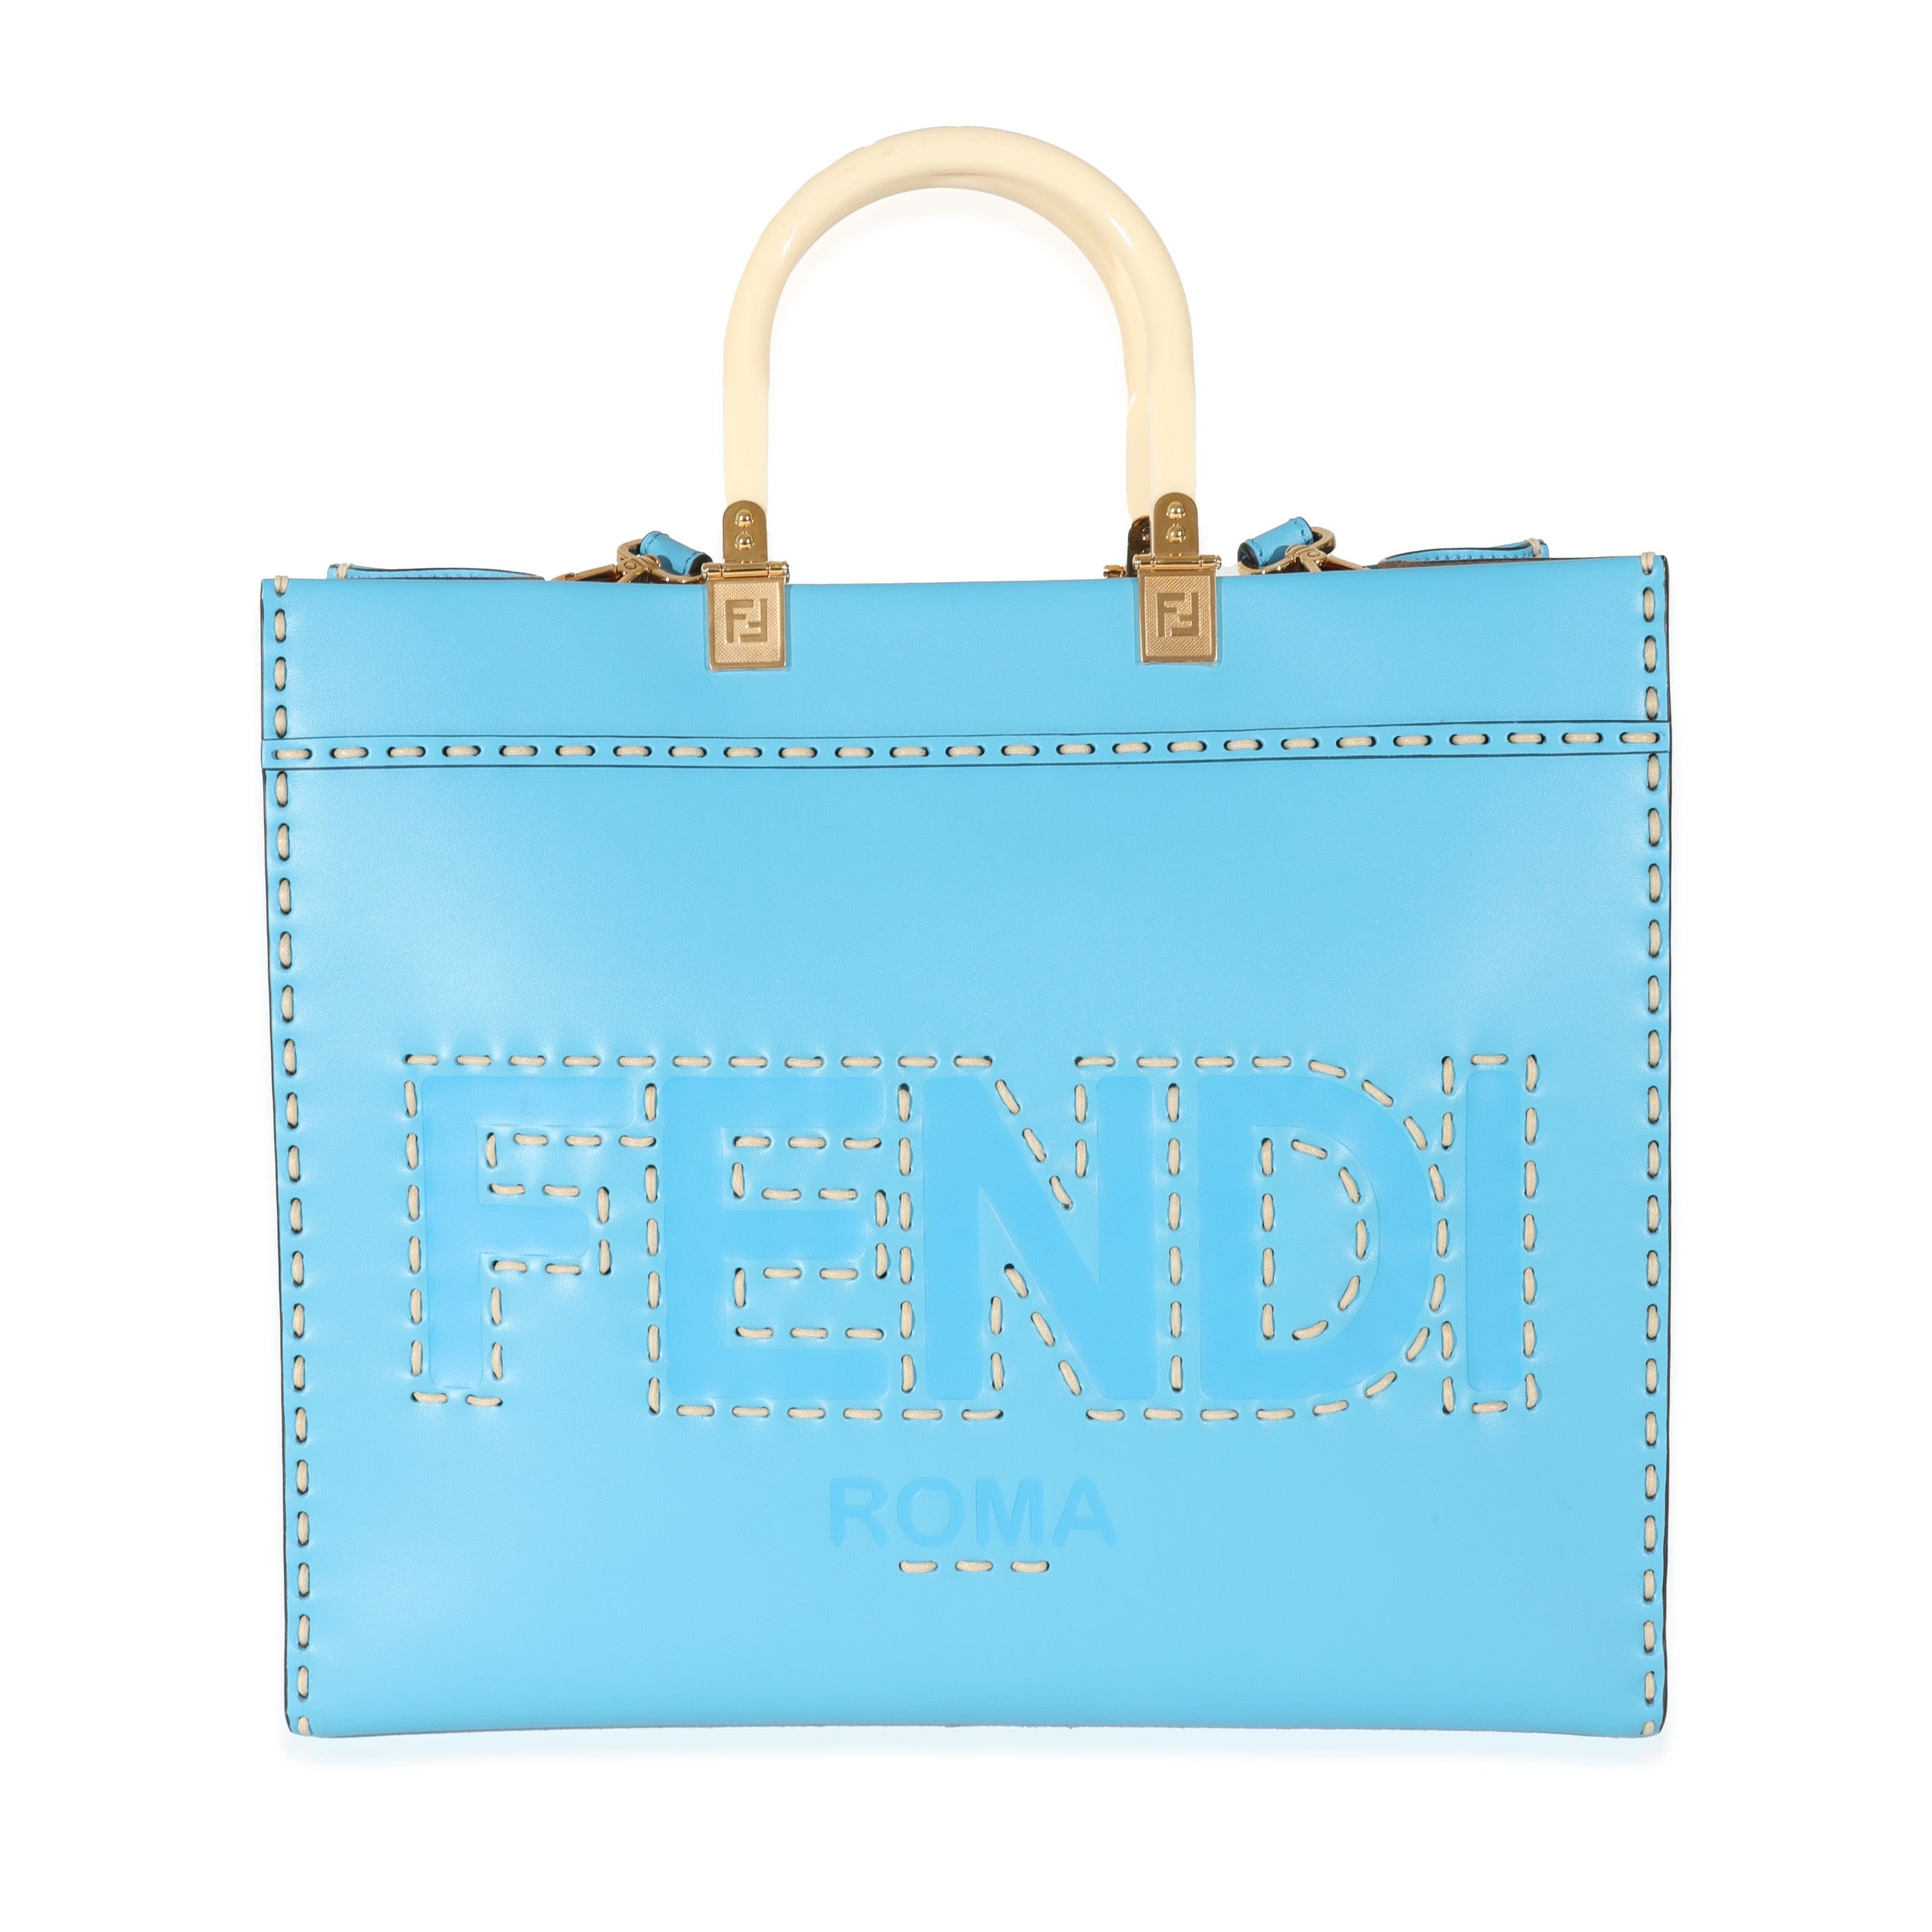 Fendi Women's Sunshine Medium Tote Bag